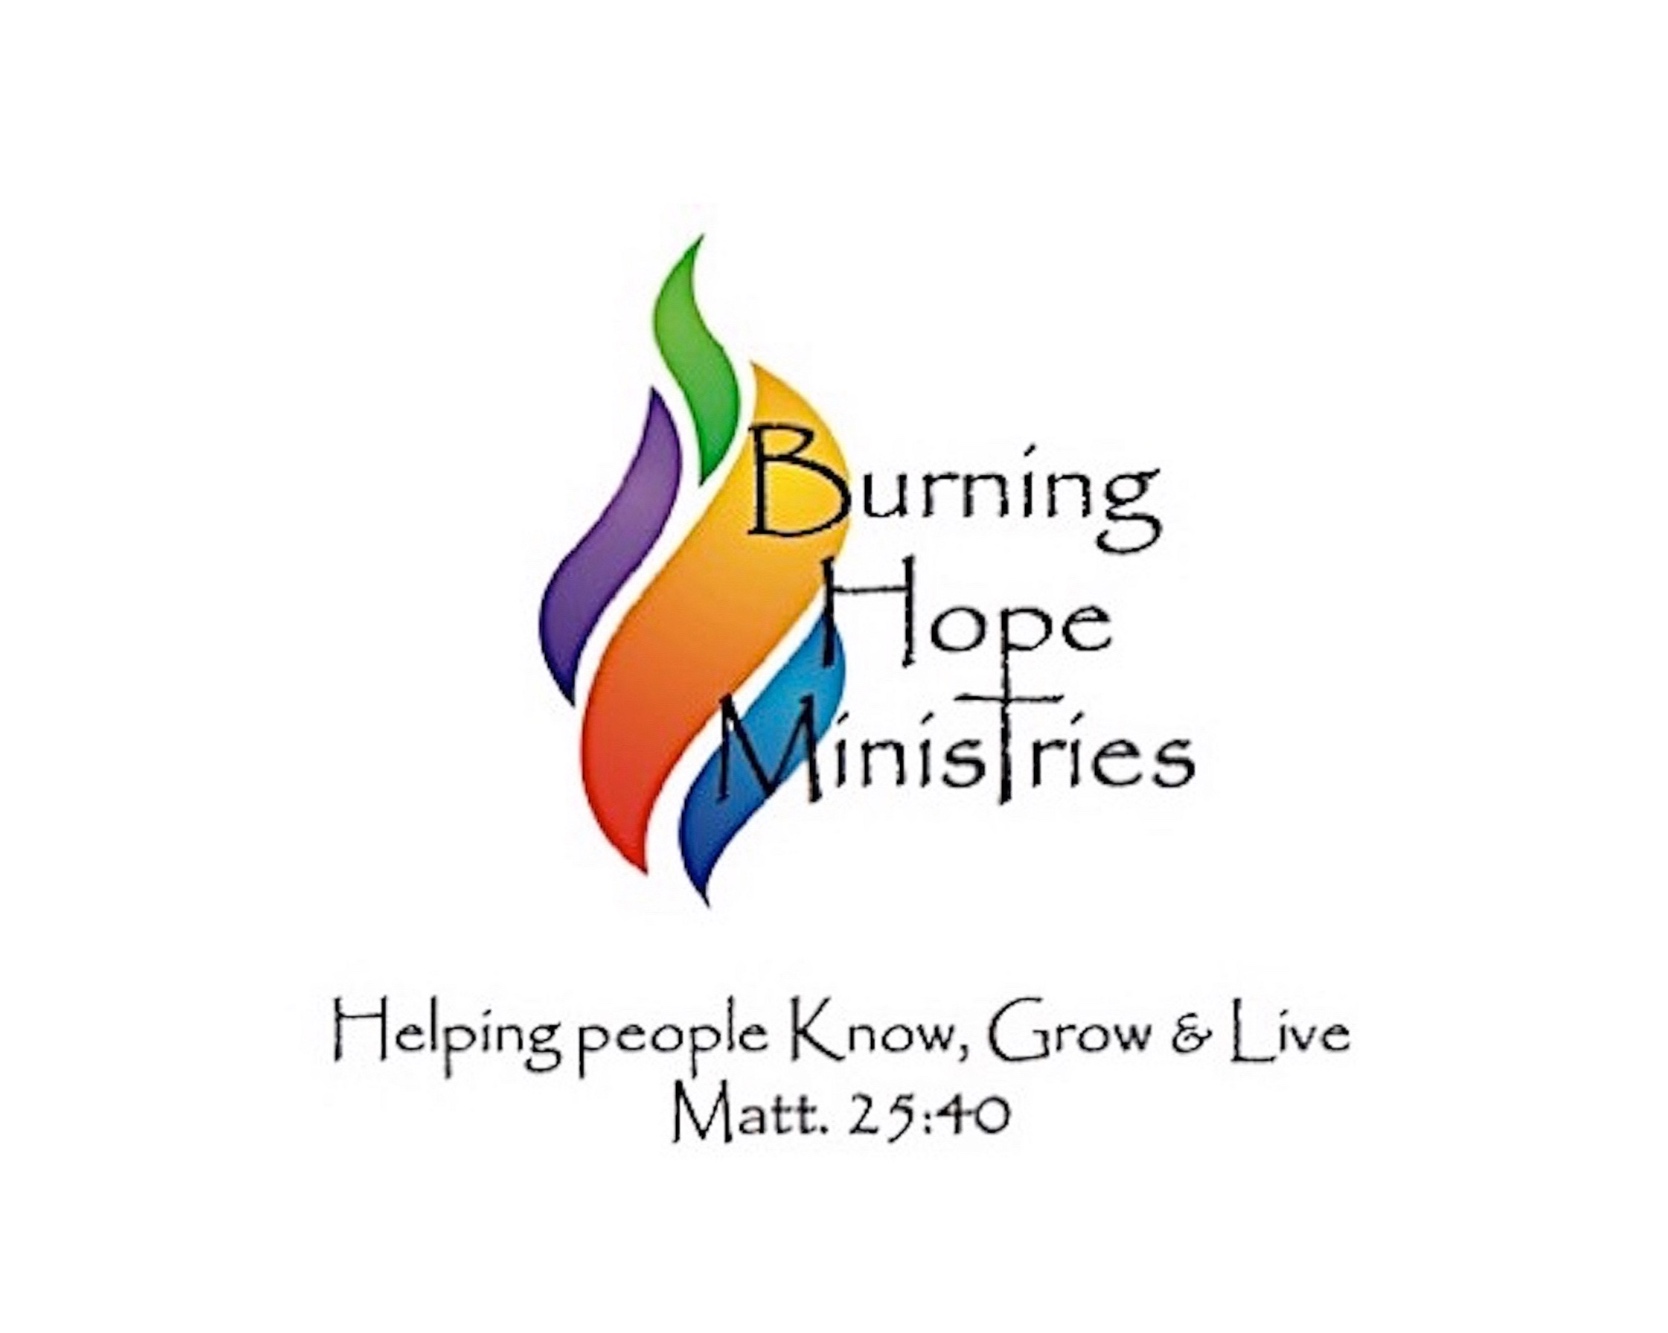 Burning Hope Ministries